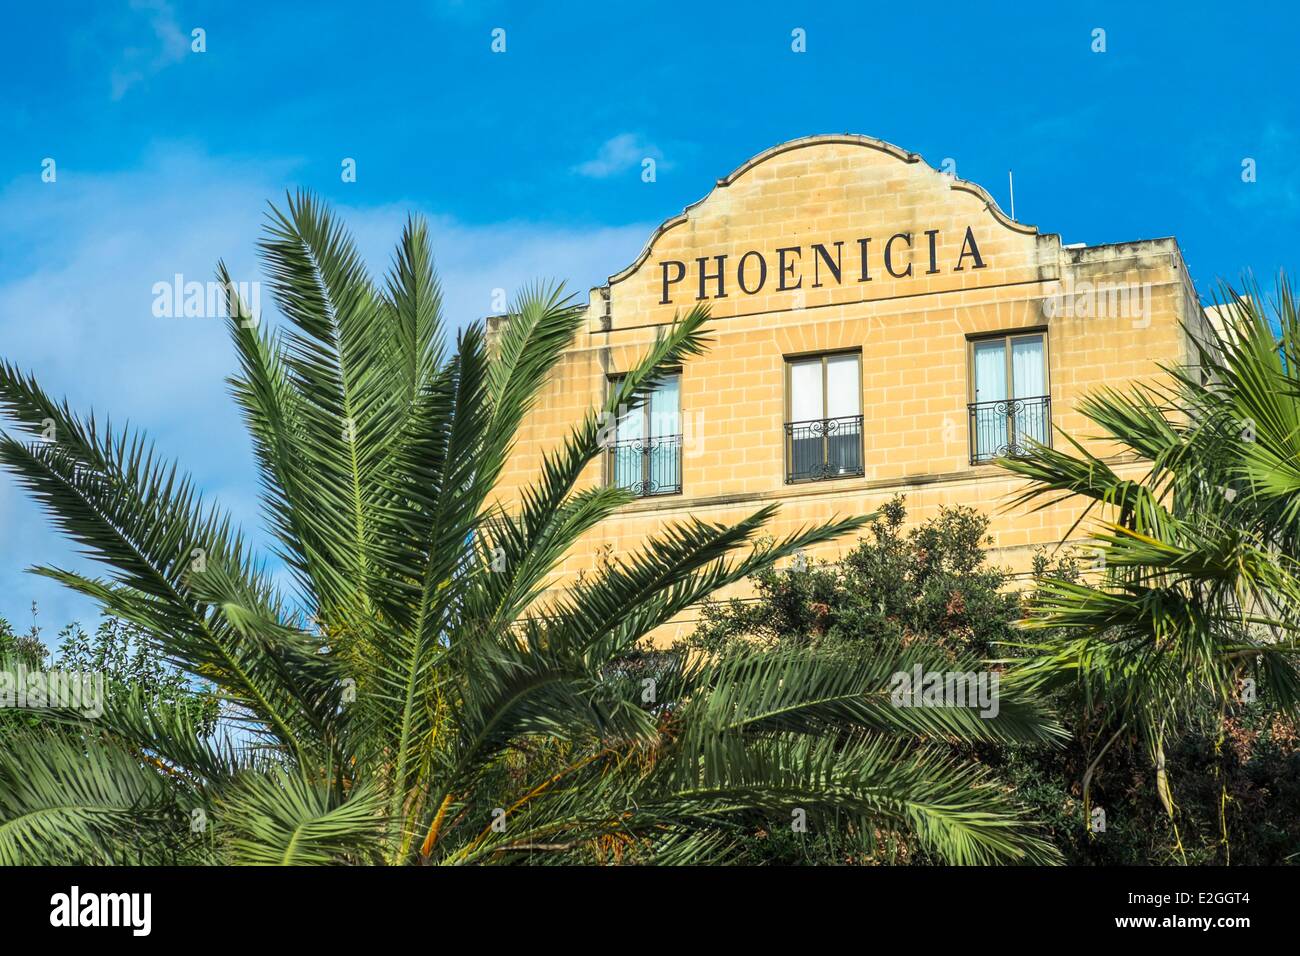 Malta Floriana Hotel Phoenicia built in1937 first great luxury hotel on island Stock Photo